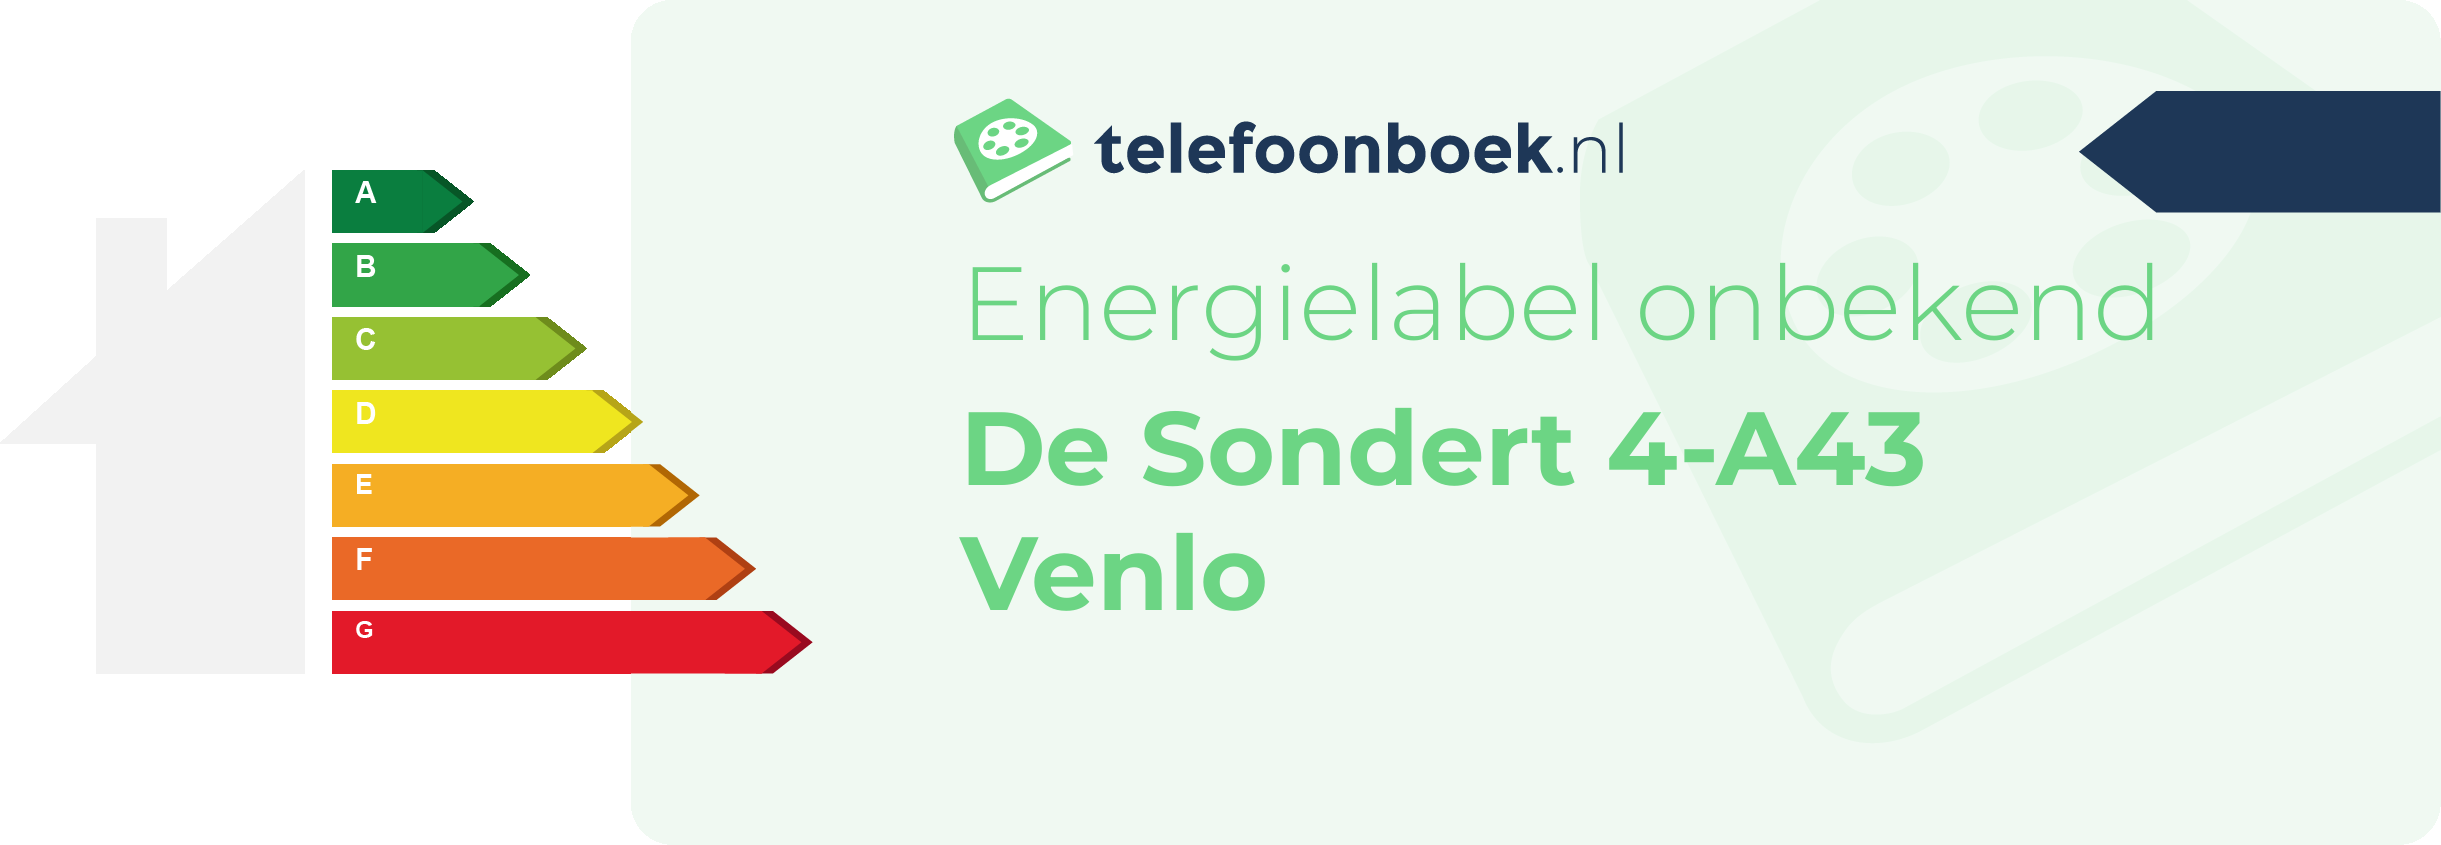 Energielabel De Sondert 4-A43 Venlo